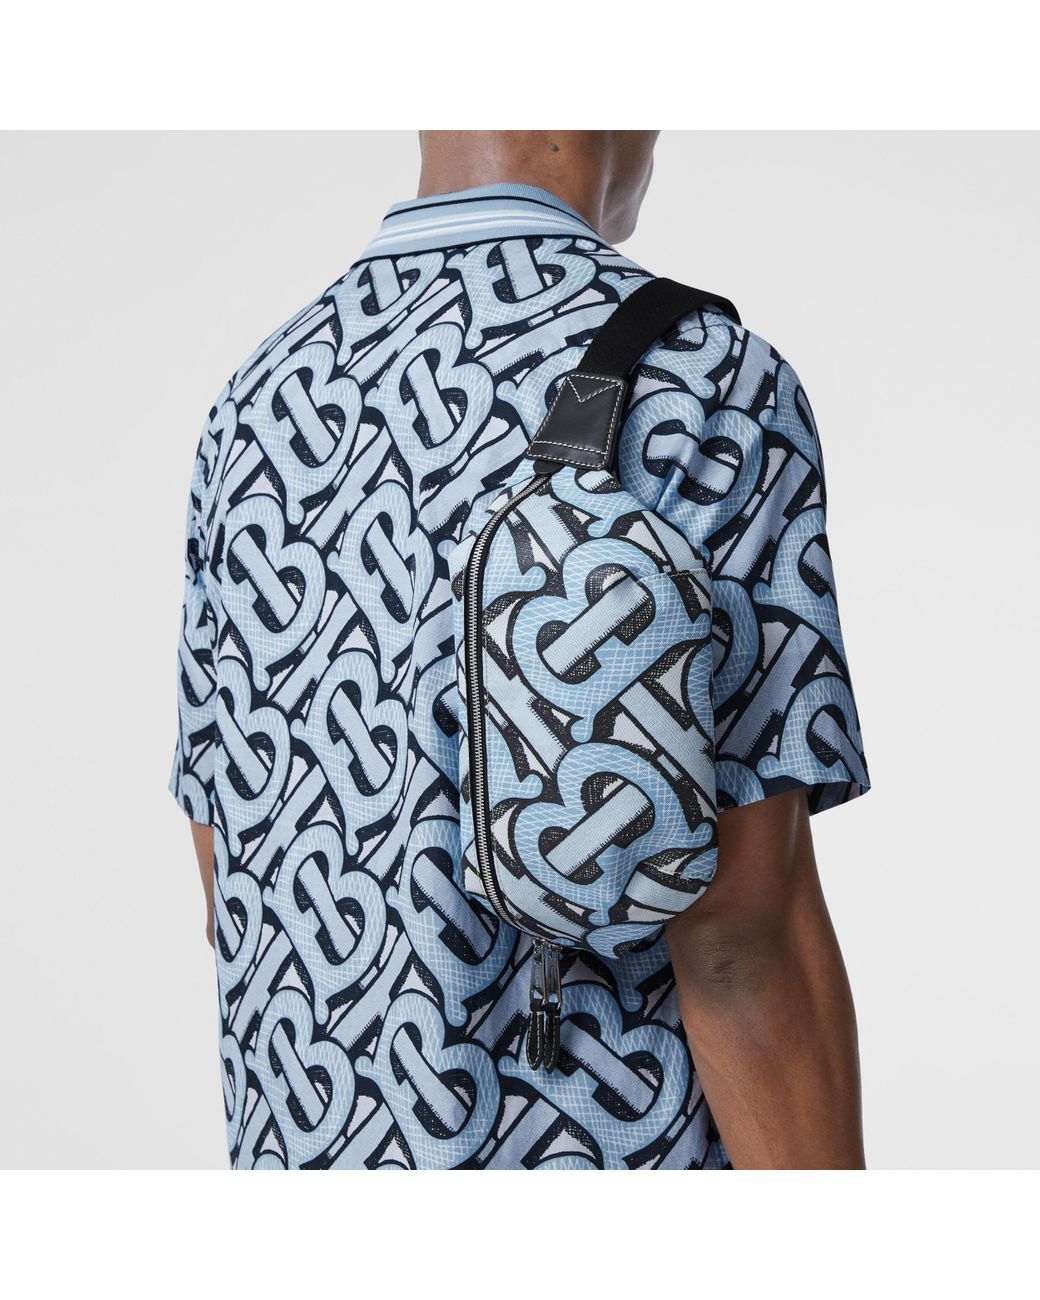 Men's Louis Vuitton Shirts from C$1,350